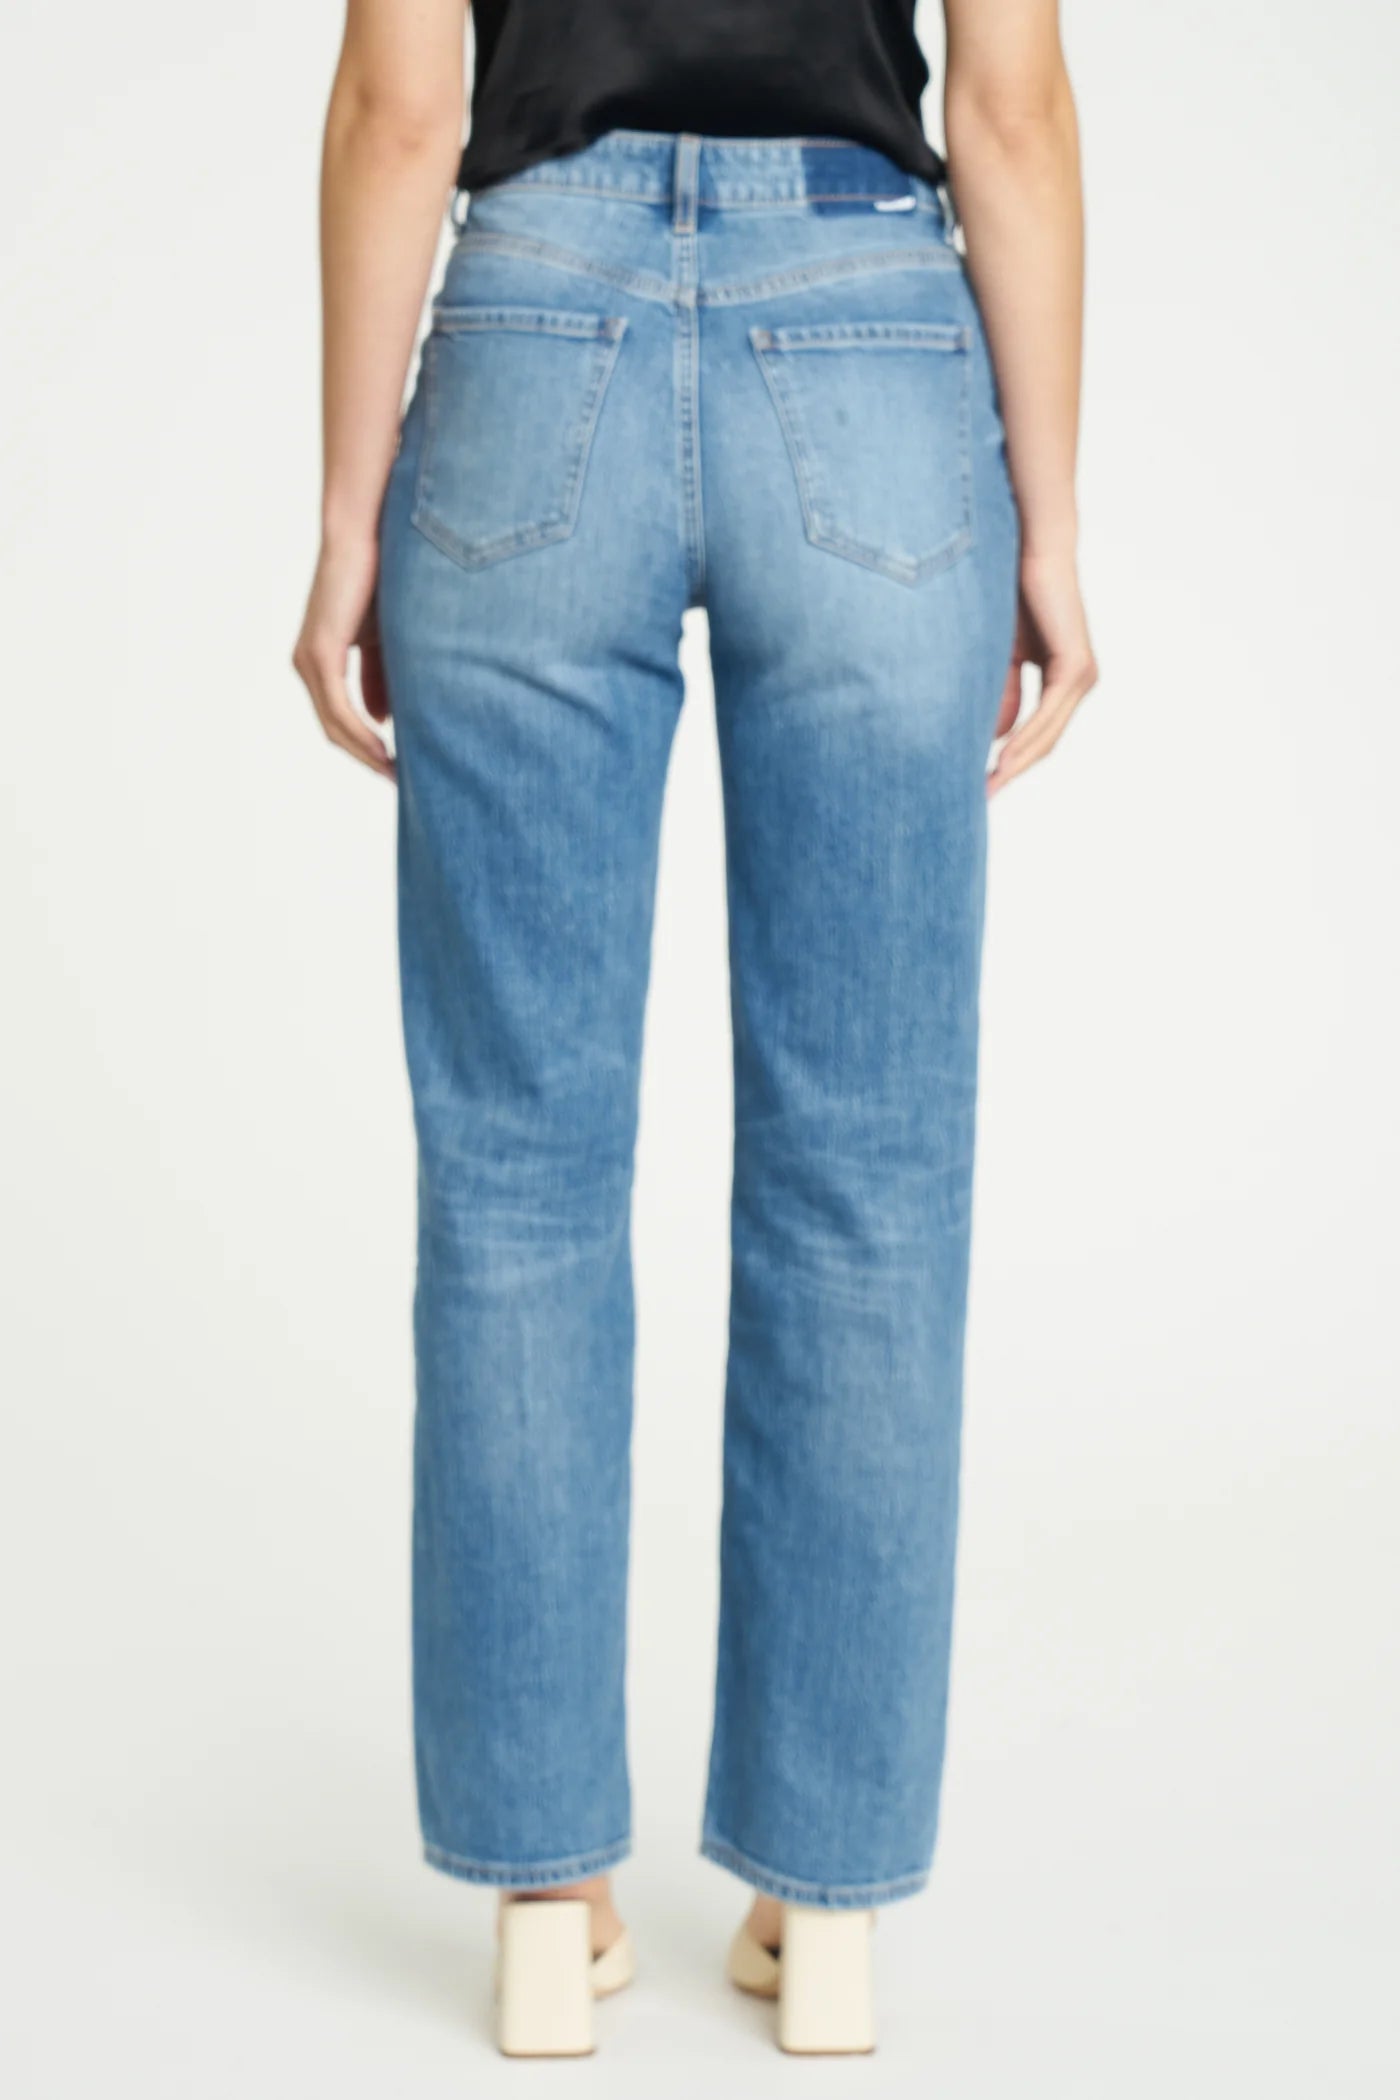 Daze Denim Sundaze Crossover Jeans